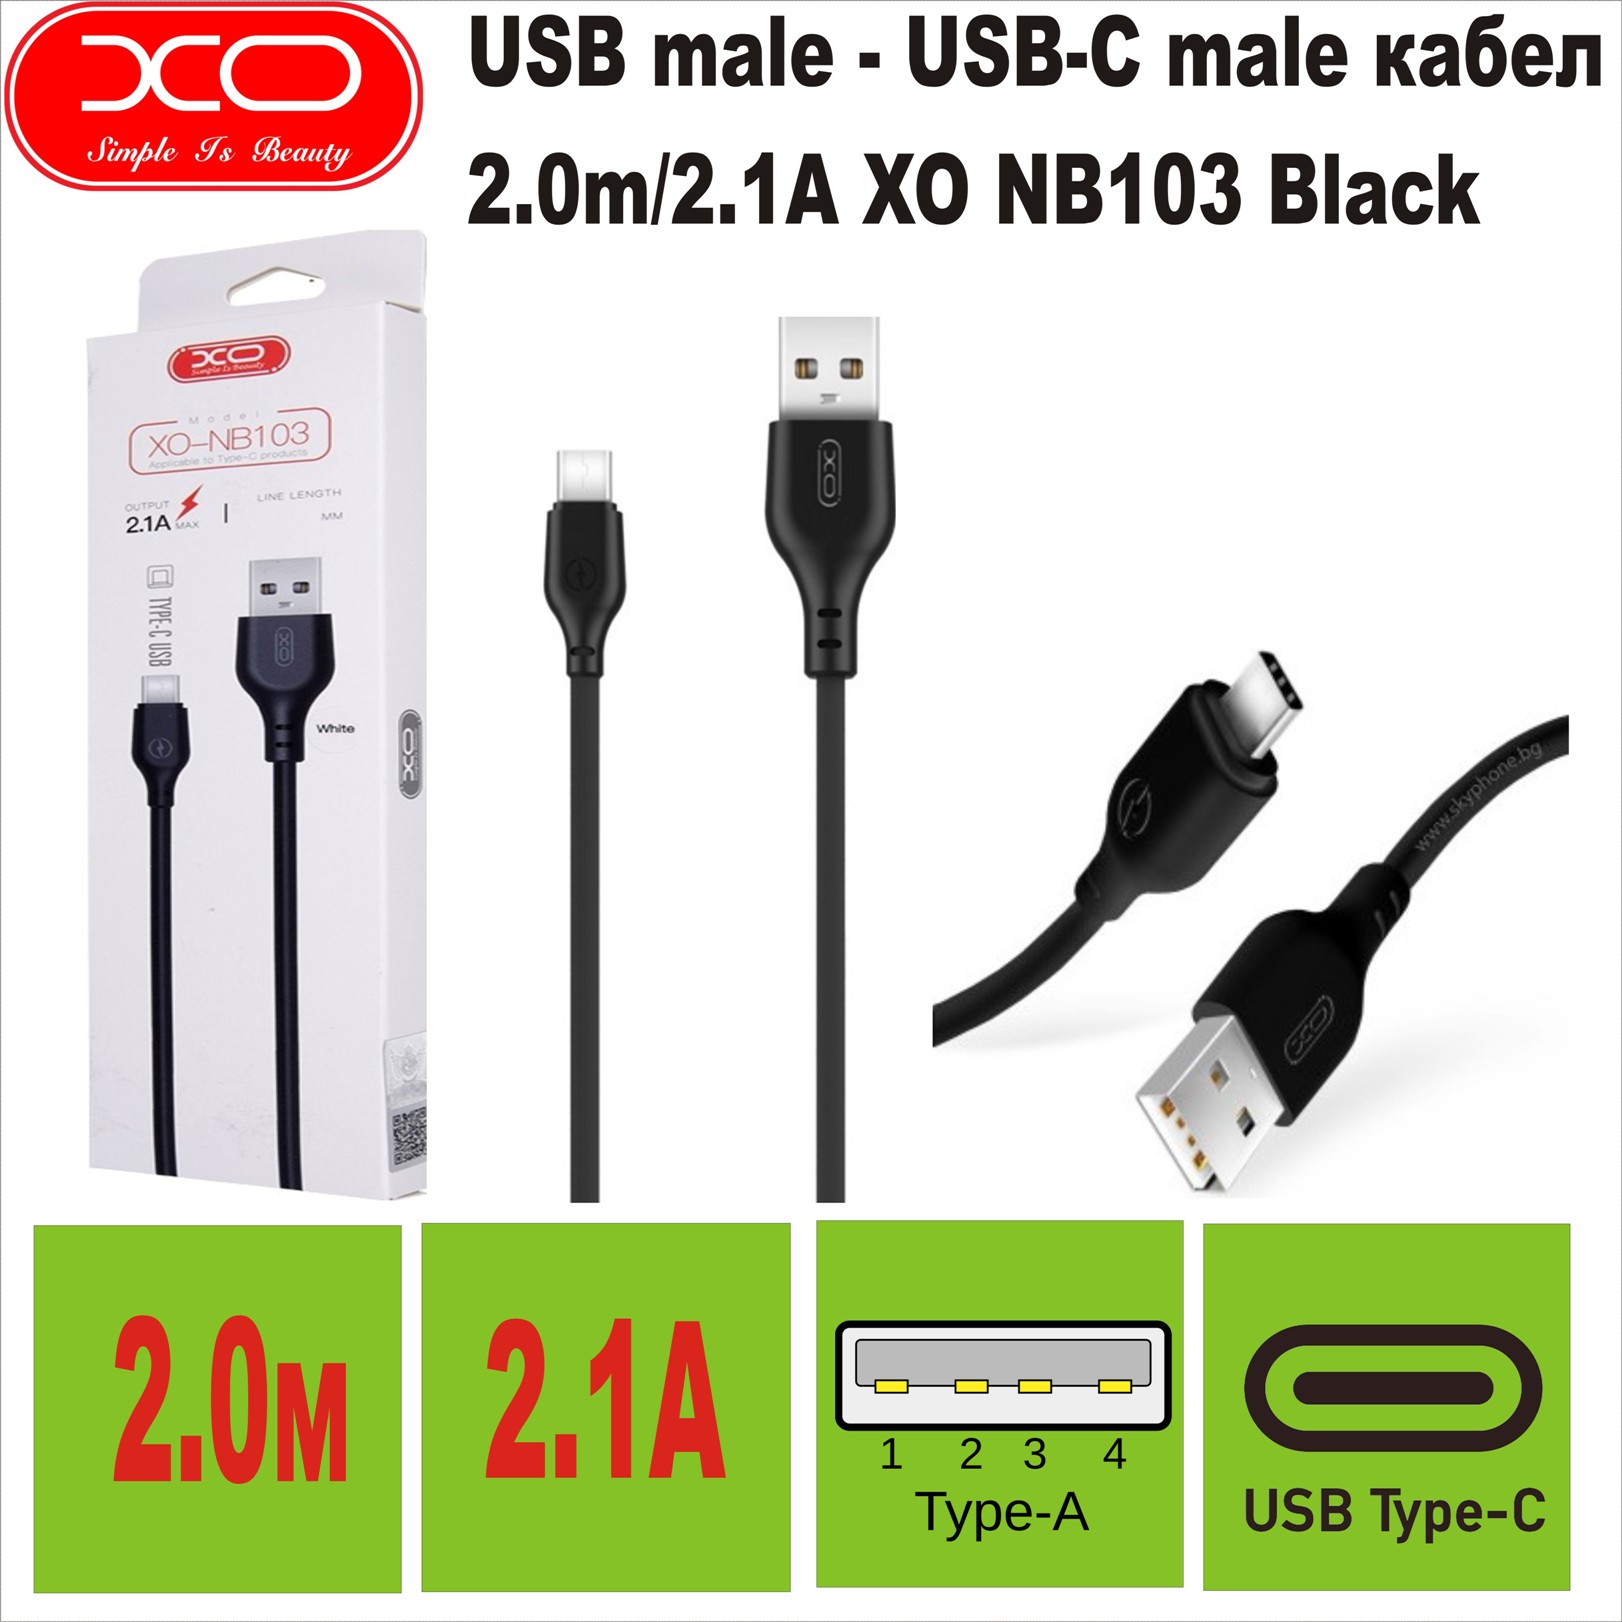 USB male - USB-C male 2.0m/2.1A XO NB103 Black